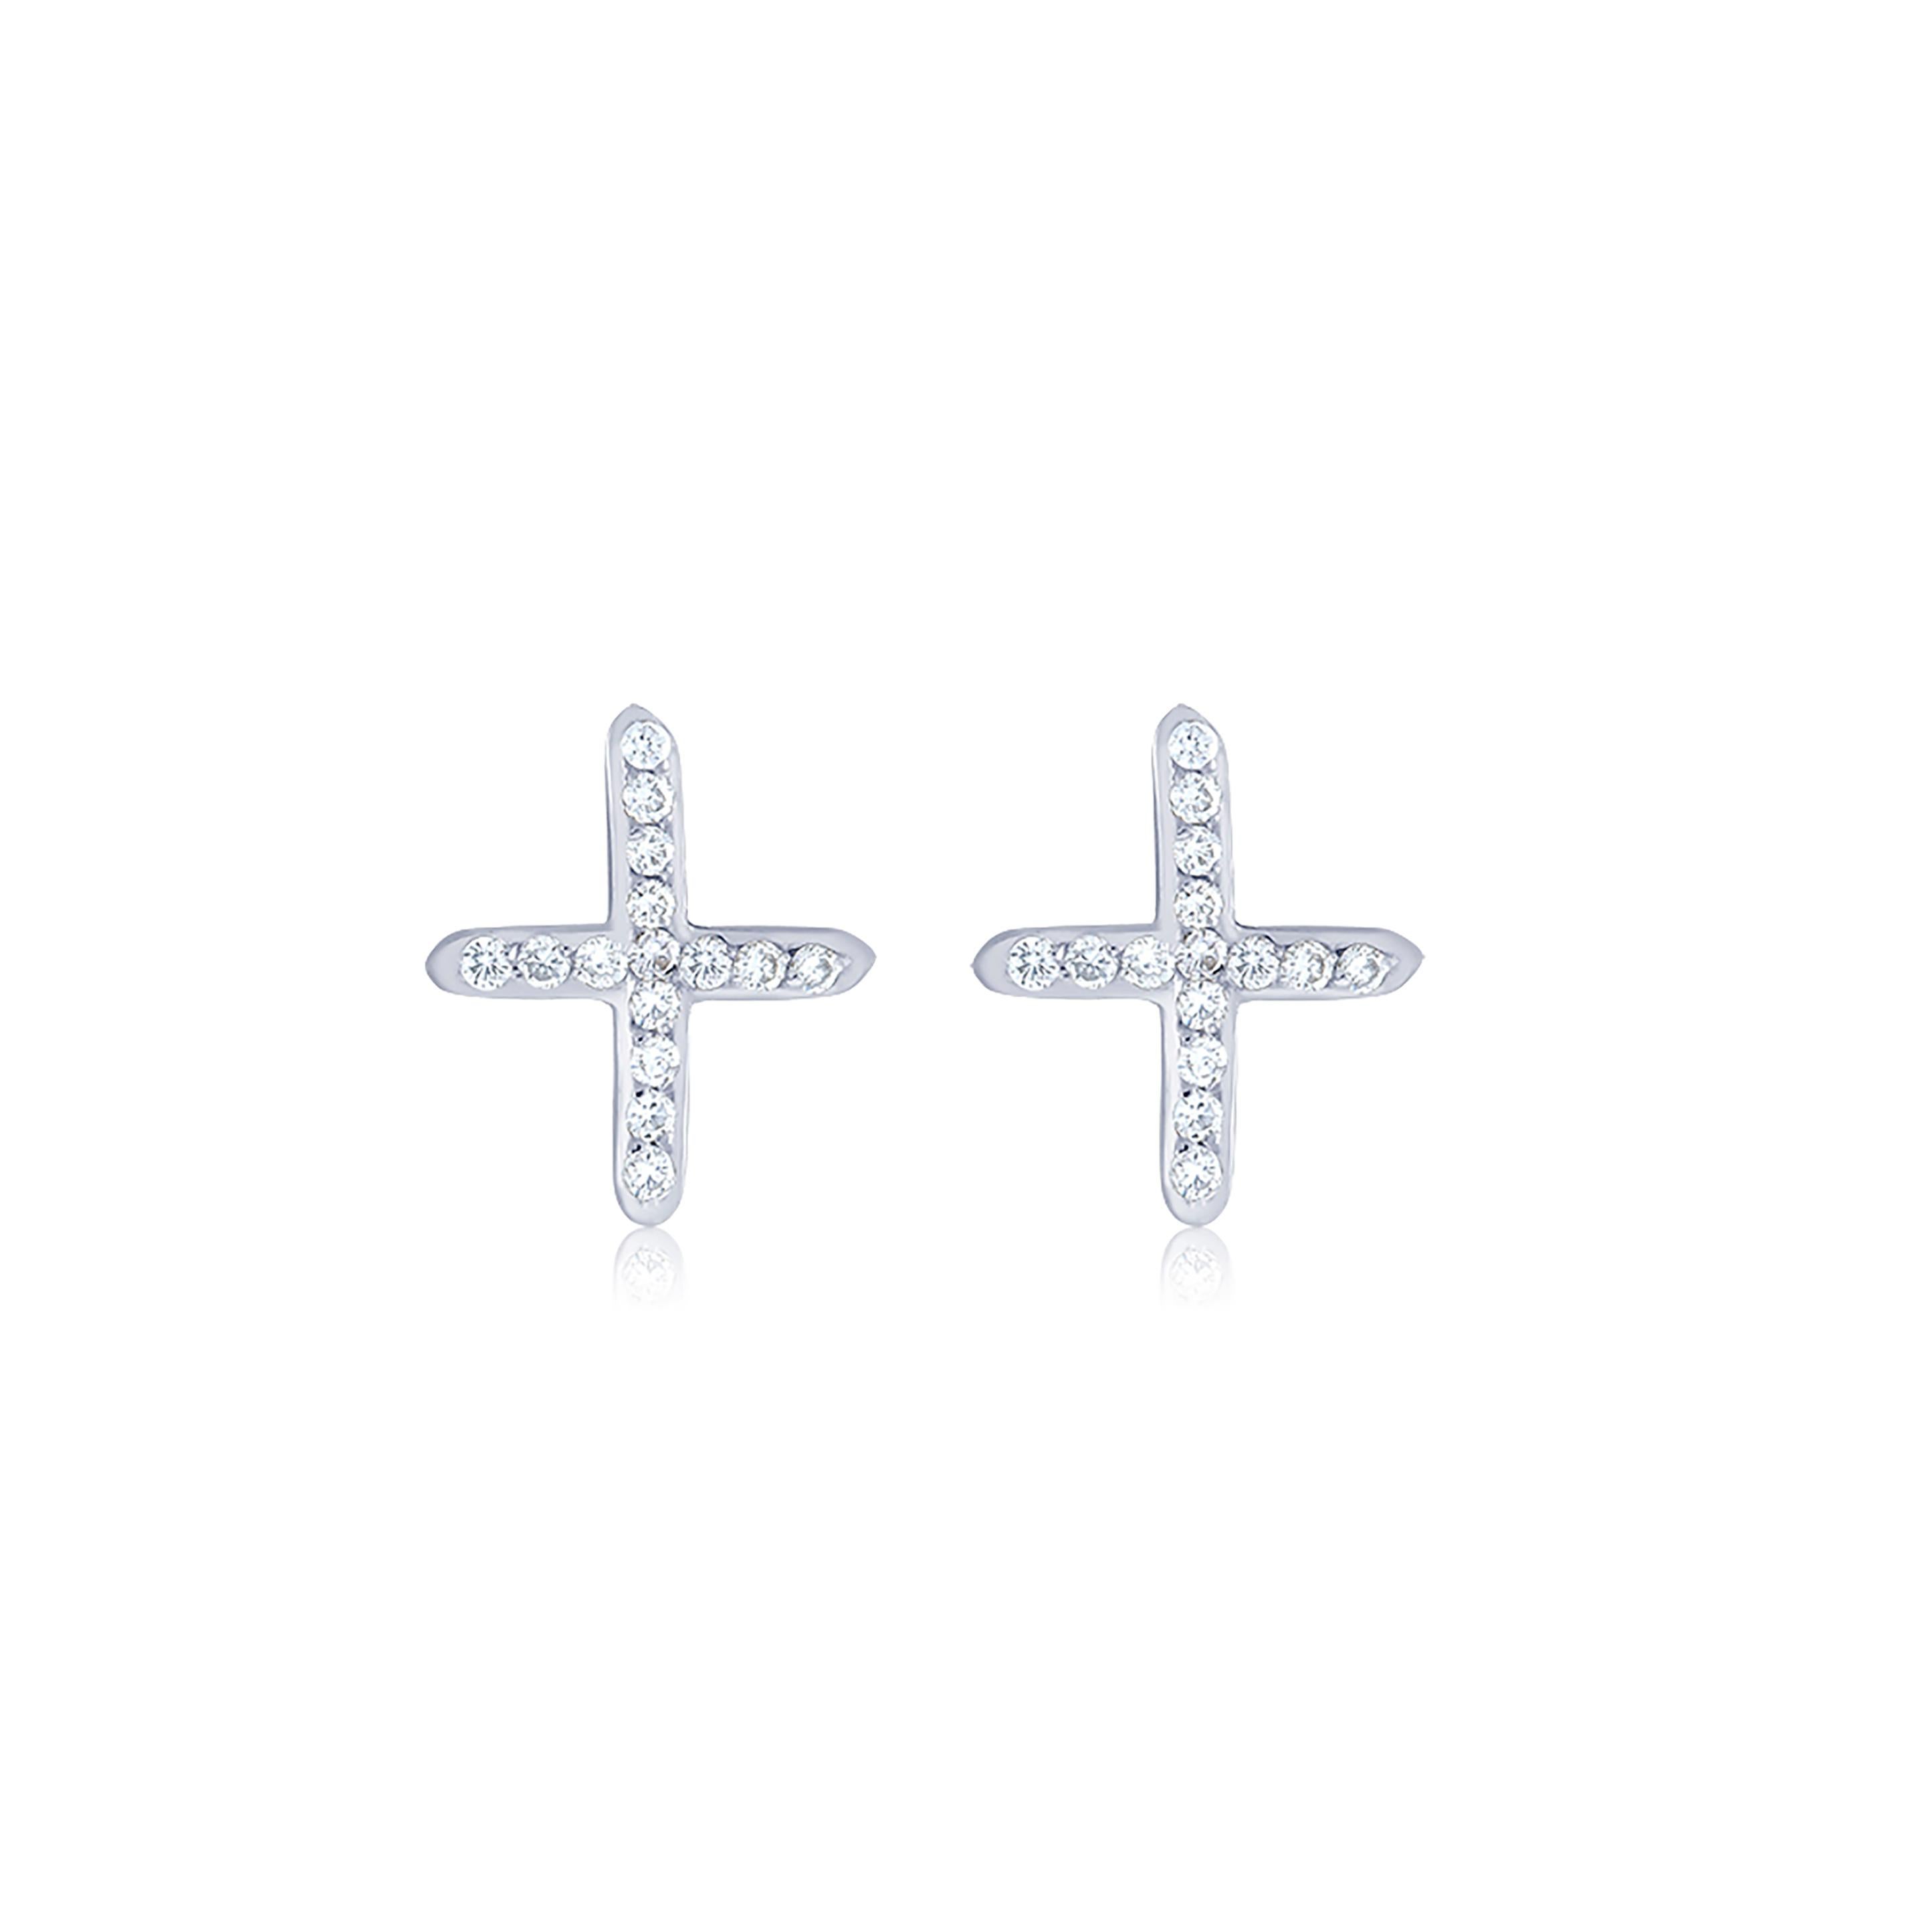 Round Cut White Gold Diamond Cross Stud Earrings Measuring 0.40 Inch